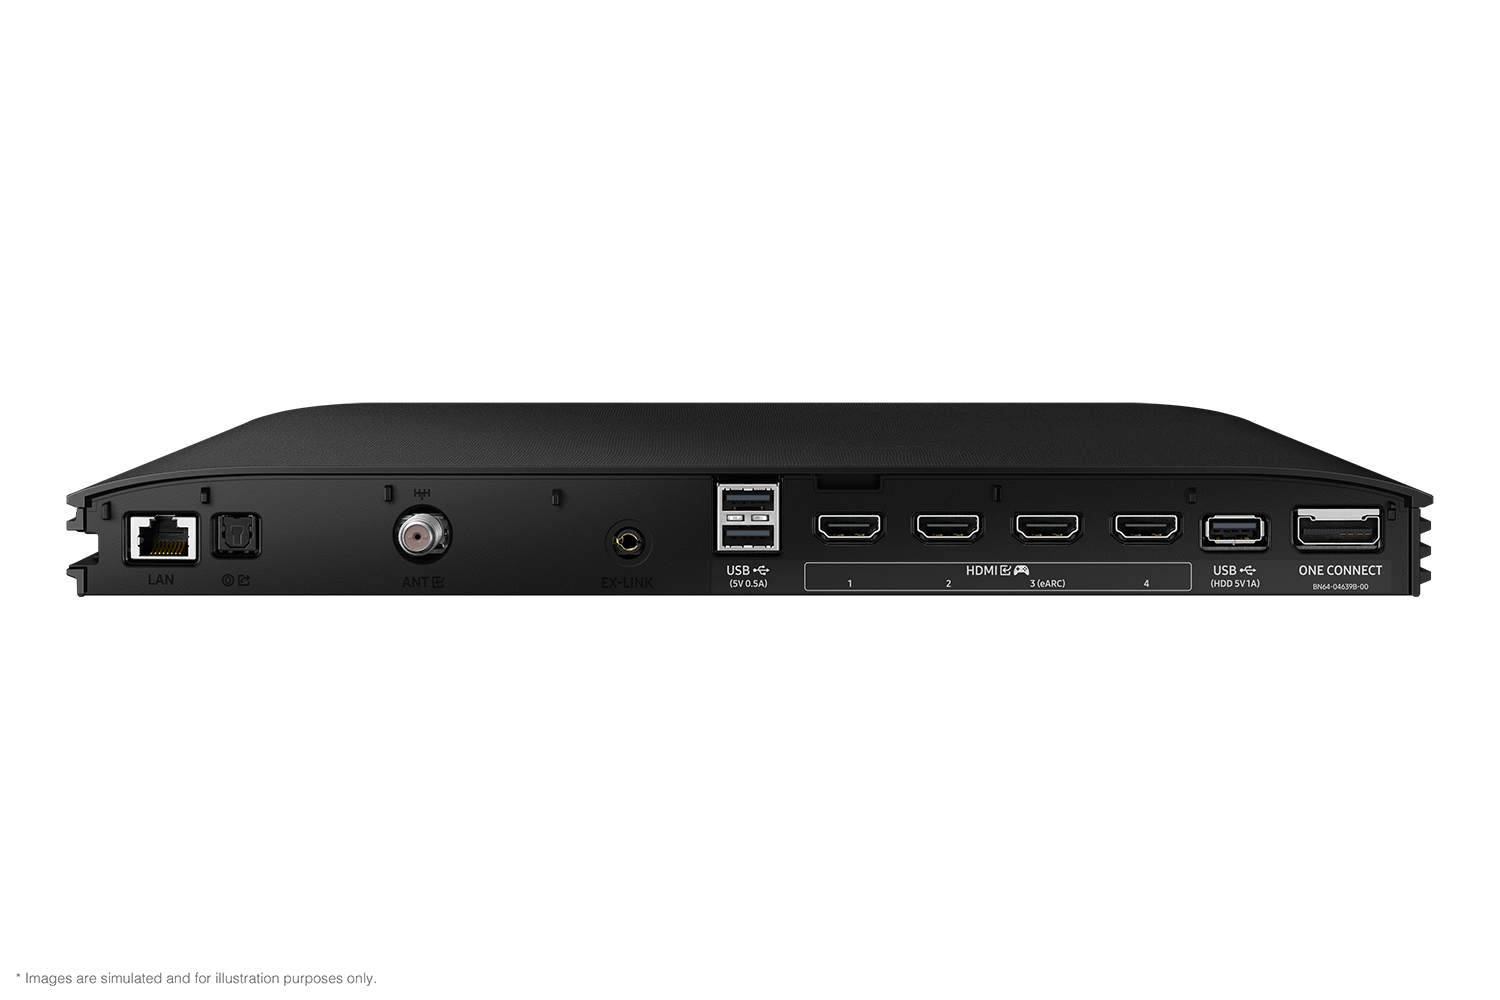 Televisor 65 pulgadas Neo QLED 8K QN800C – Tienda Virtual – Blue Planet  Electronics SAS